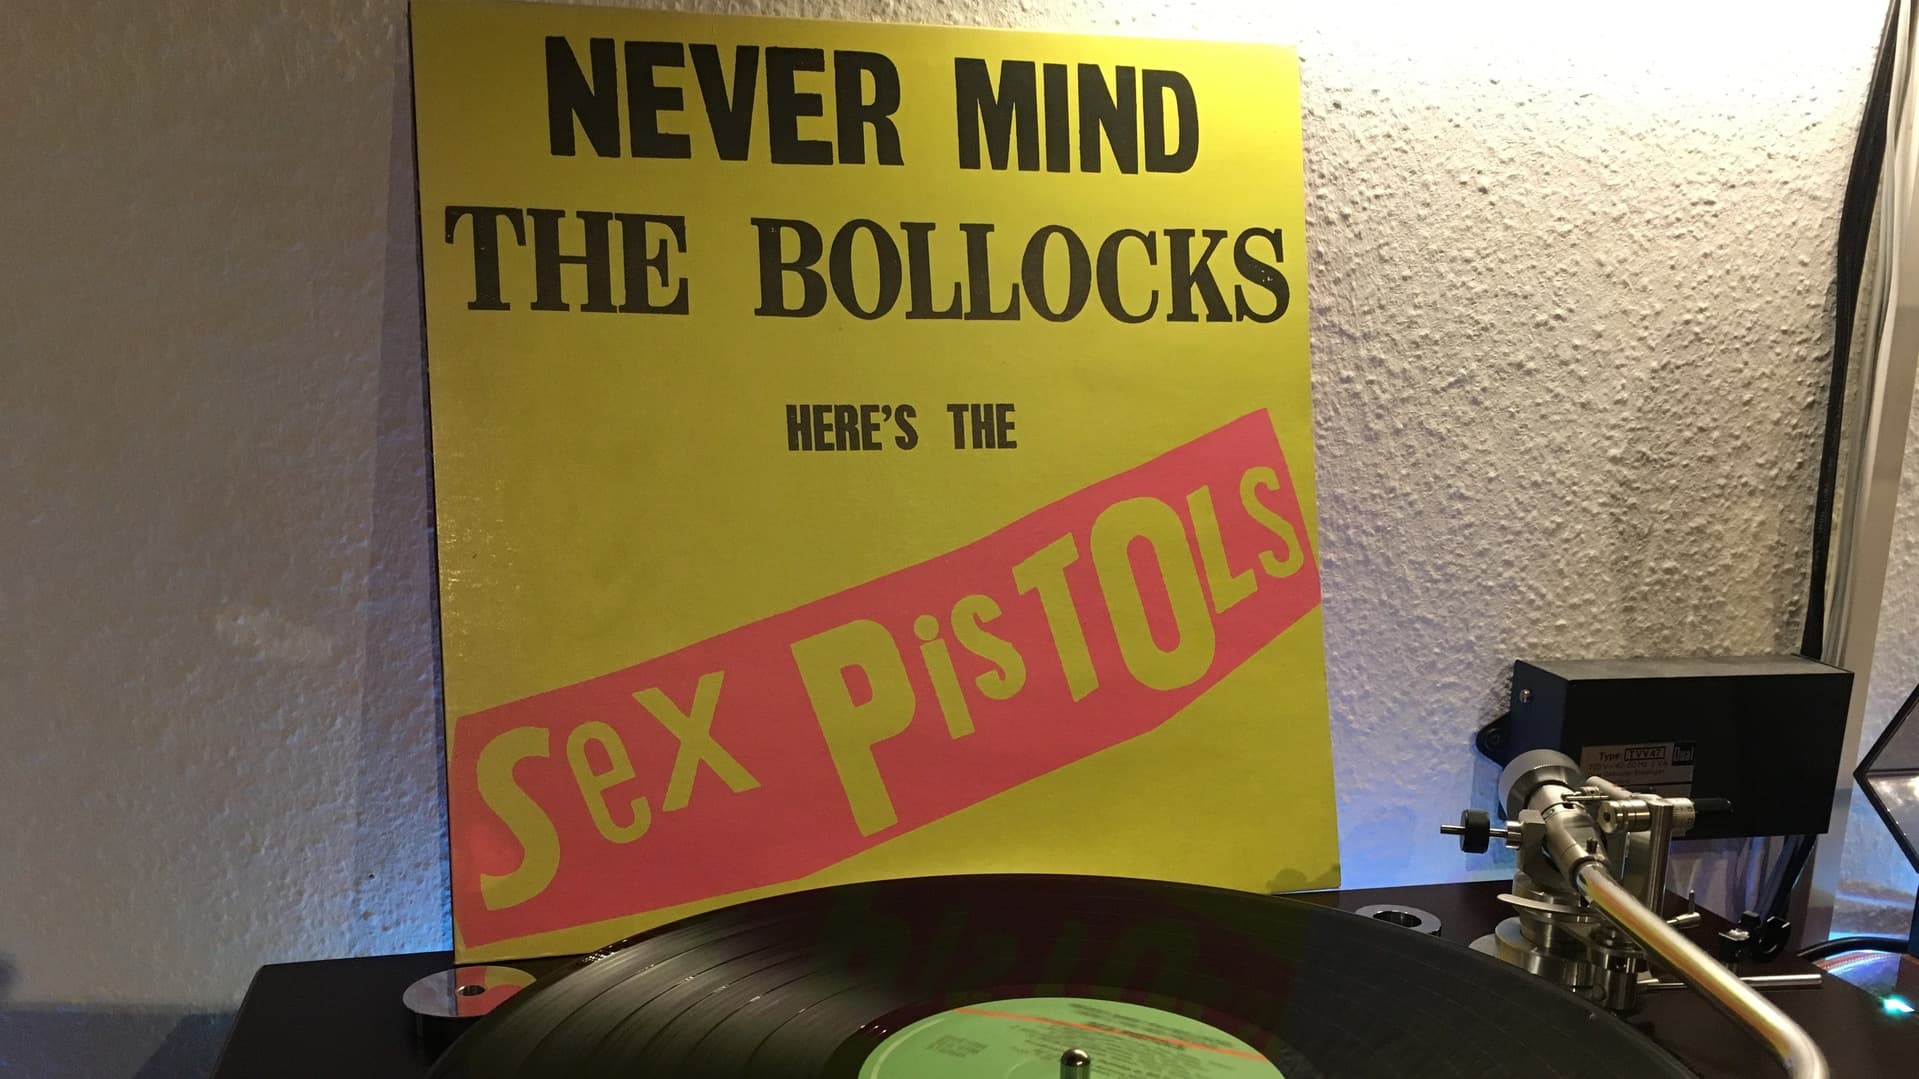 Steve Jones Guitarrista Dos Sex Pistols Comenta Oito Faixas Do Never Mind The Bollocks 7103